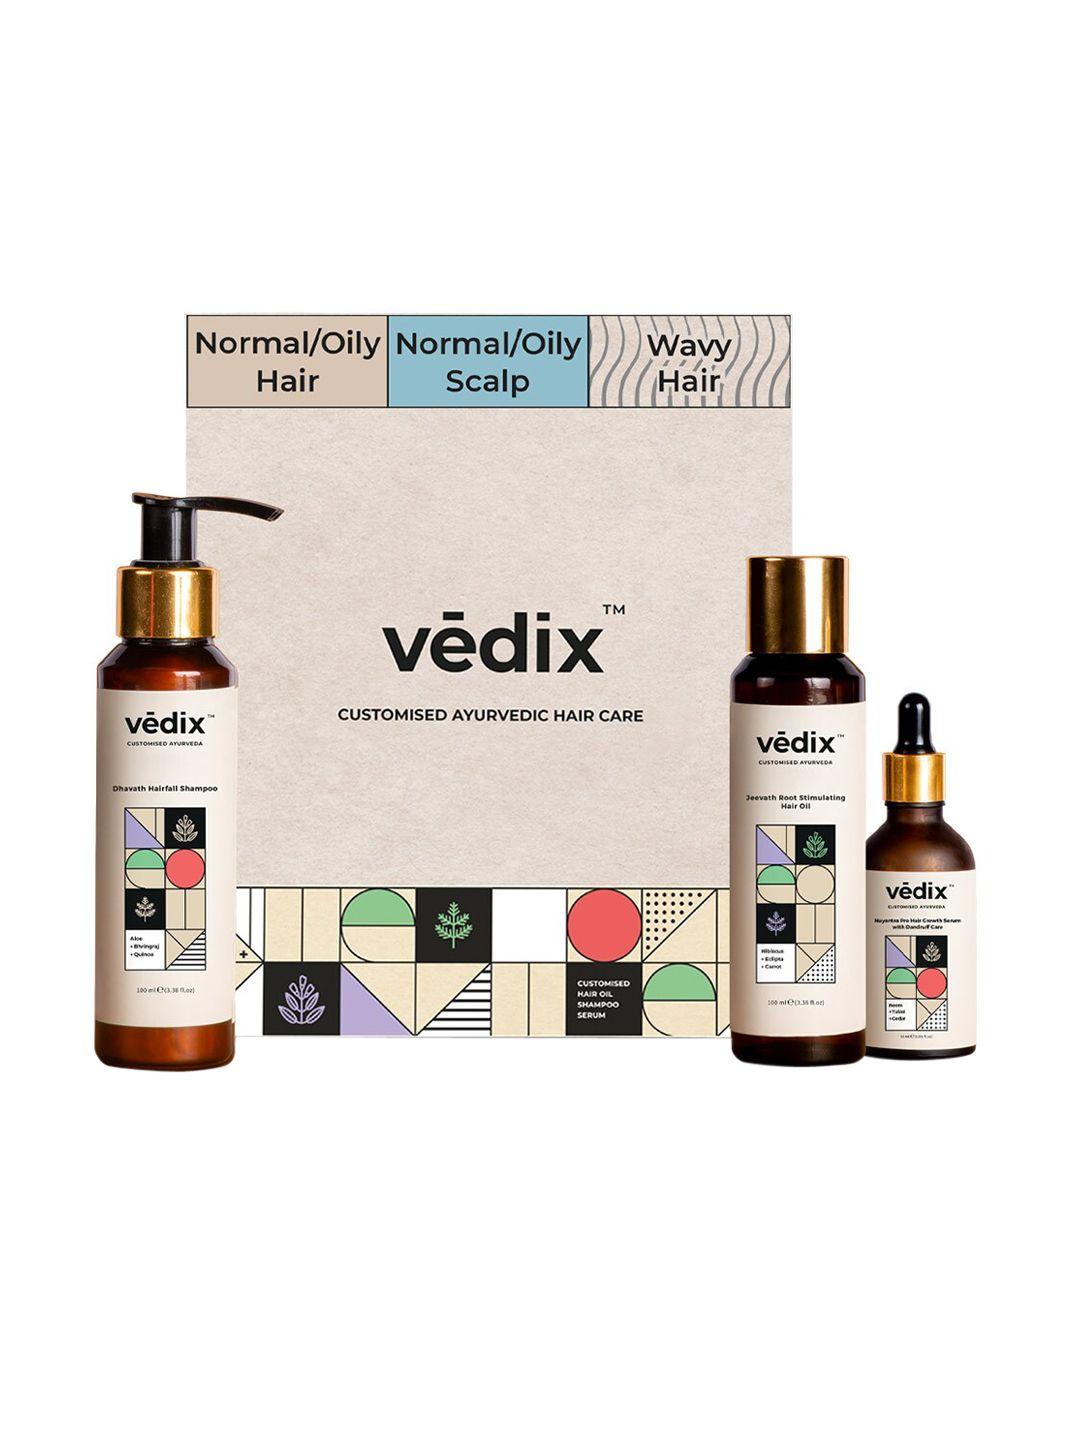 vedix customized hair fall control regimen for dry hair - dry scalp & wavy hair